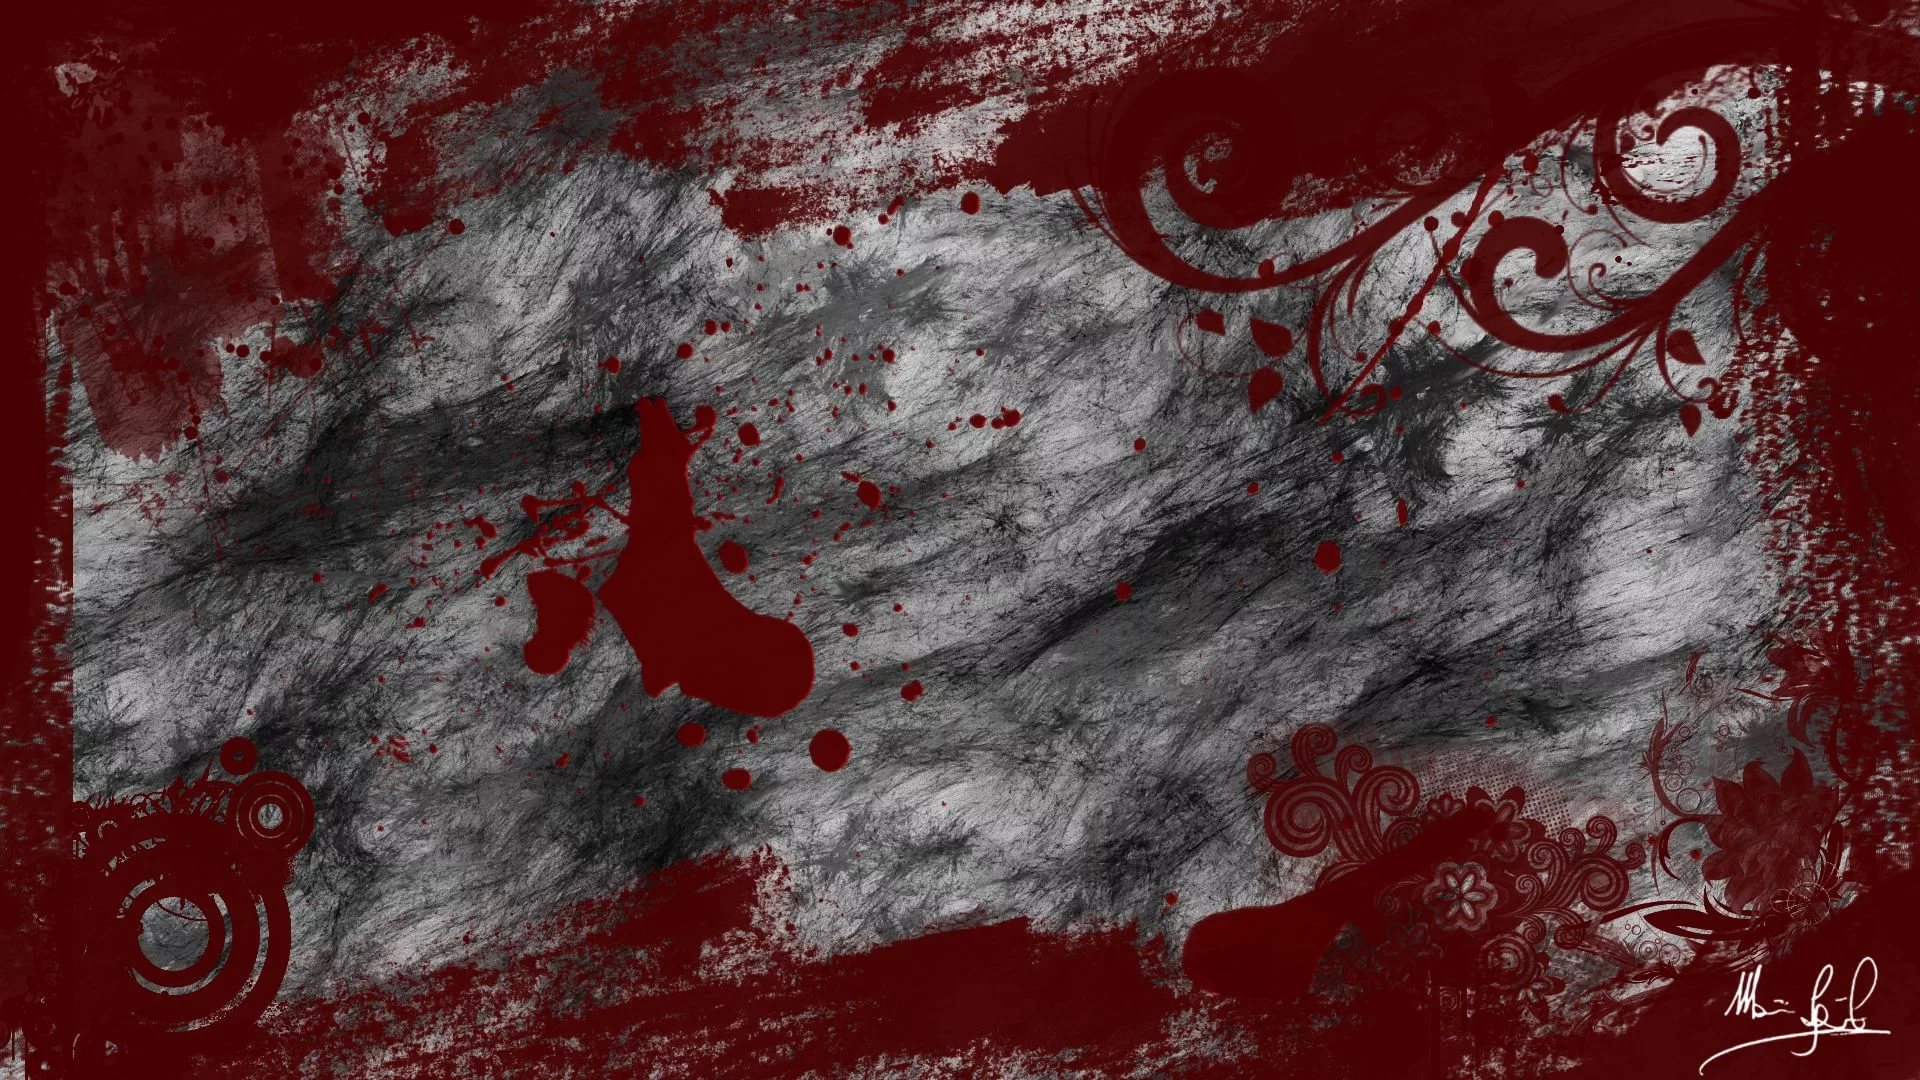 Blood hd desktop wallpaper